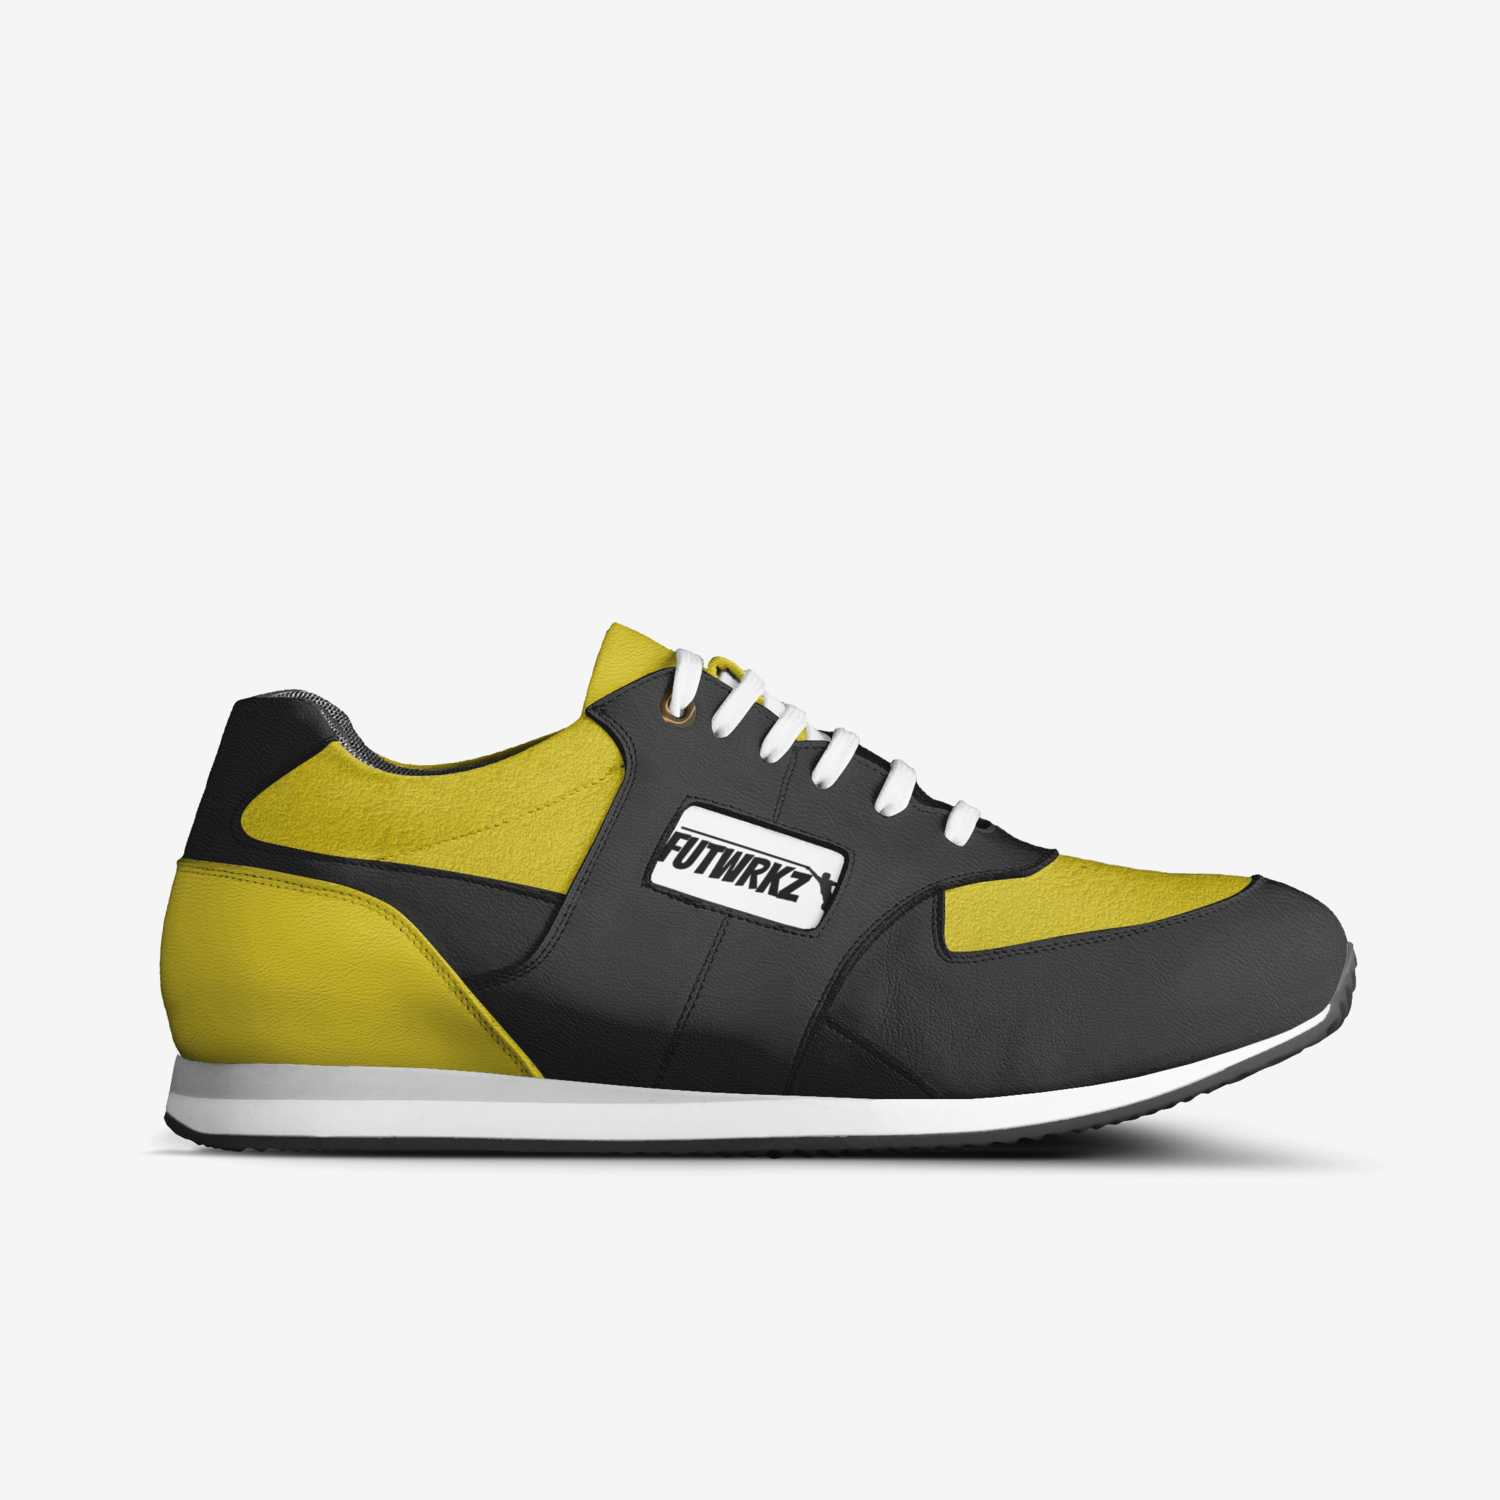 FutWrk custom made in Italy shoes by Kamar Andreas Skeete | Side view